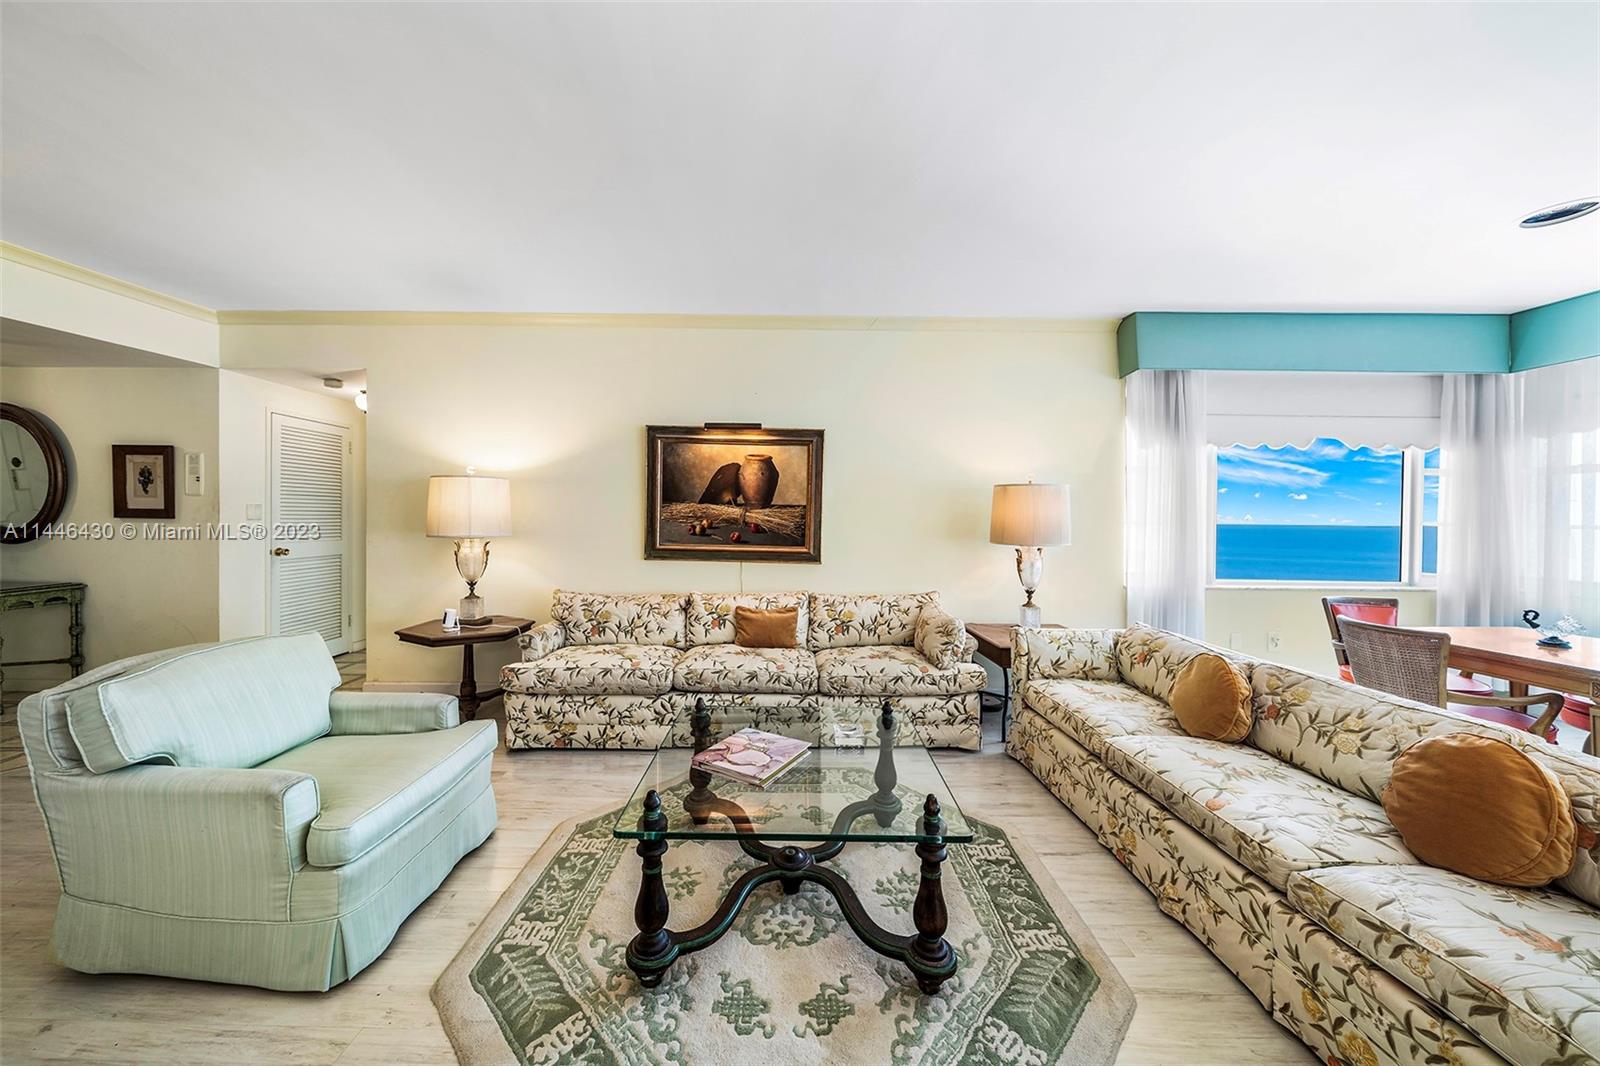 Property for Sale at 5255 Collins Ave 10A, Miami Beach, Miami-Dade County, Florida - Bedrooms: 1 
Bathrooms: 2  - $485,000